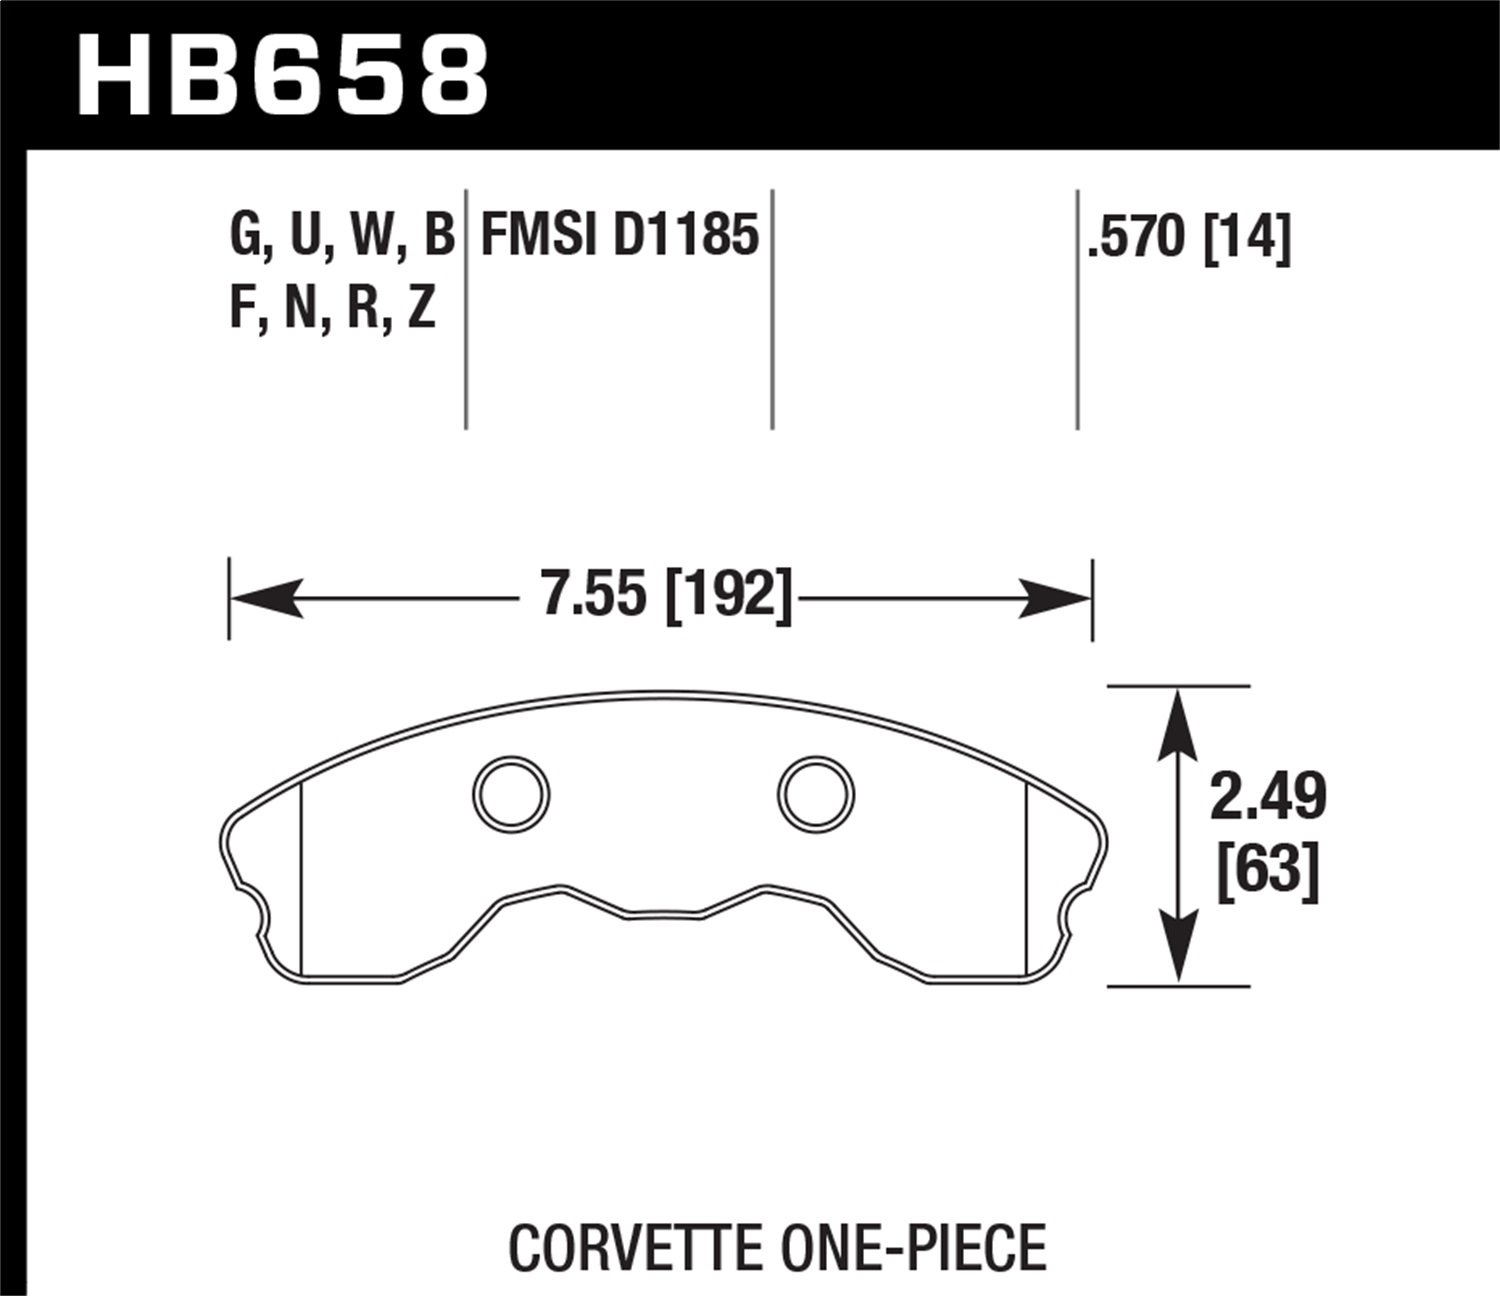 DTC-30 BRAKE PADS Corvette 1-pc Front